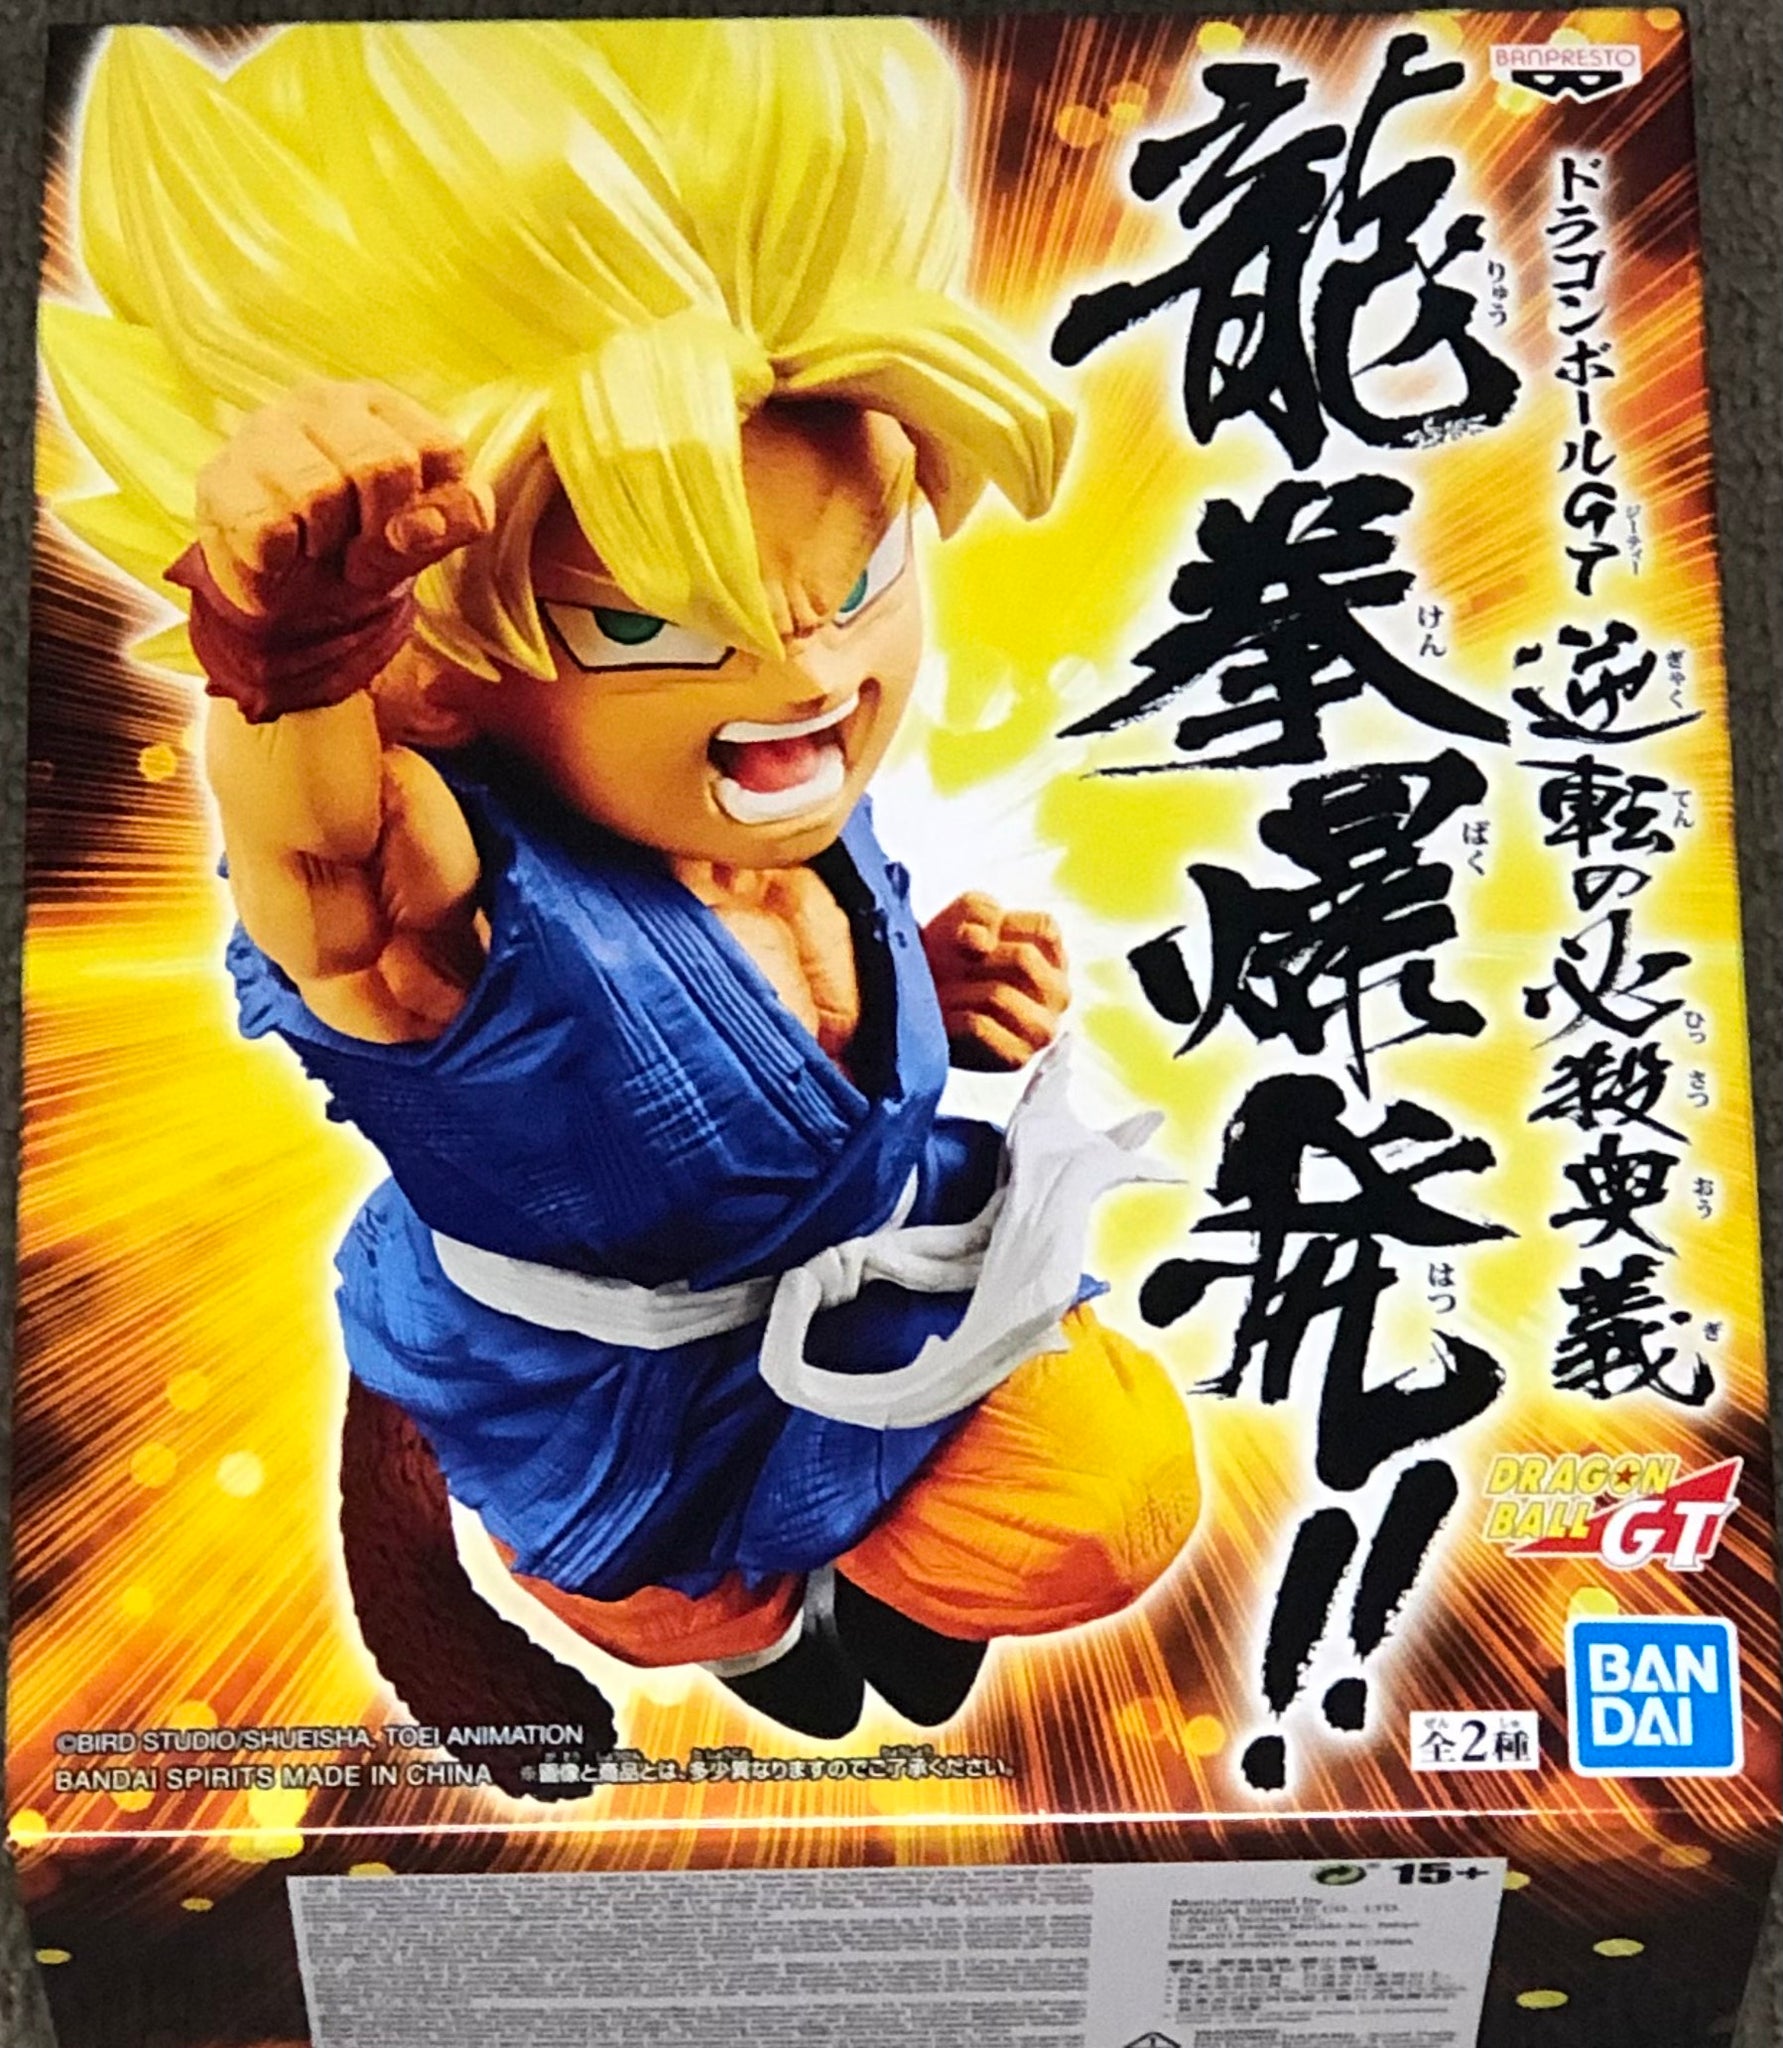 Action Figure Dragon Ball GT Goku Super Sayajin Wrath of the